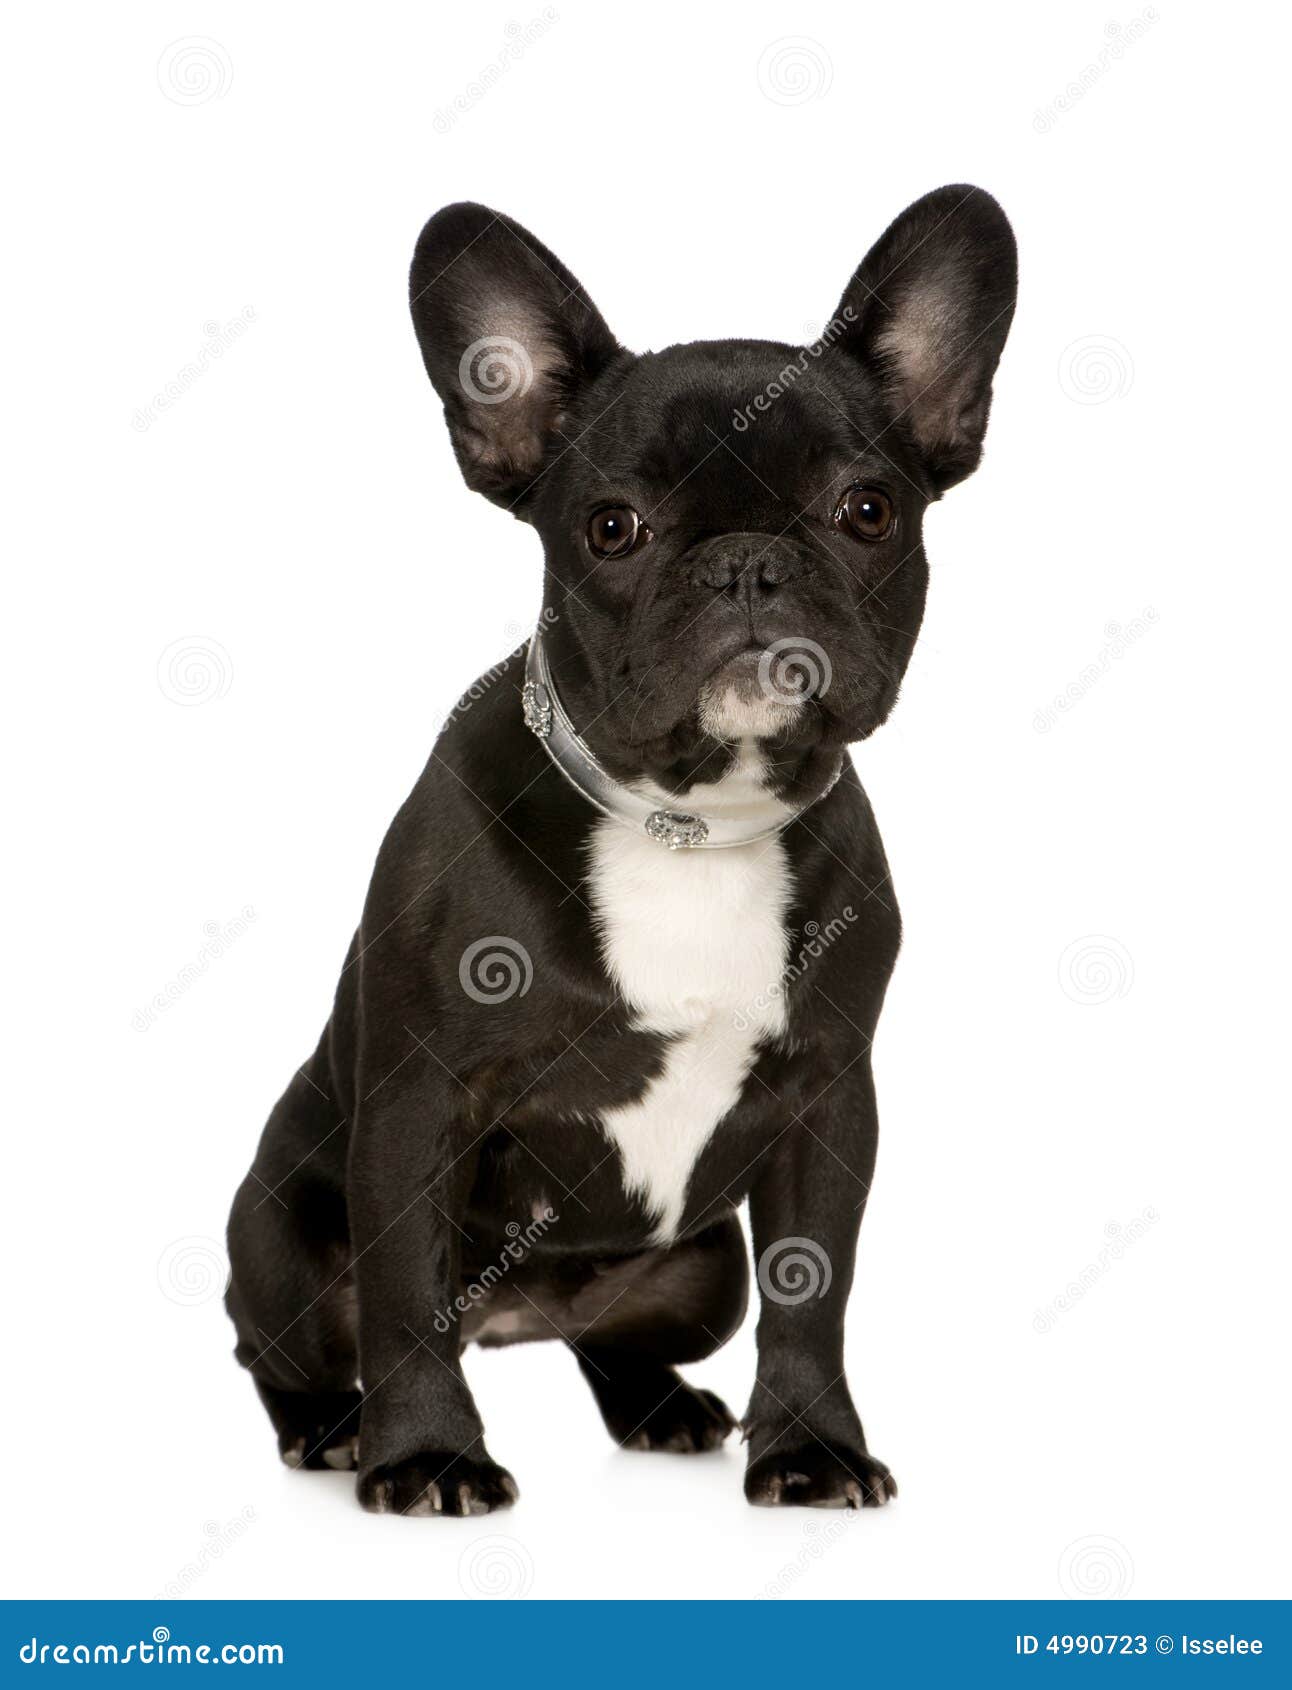 French Bulldog (6 months) stock image. Image of isolated - 4990723